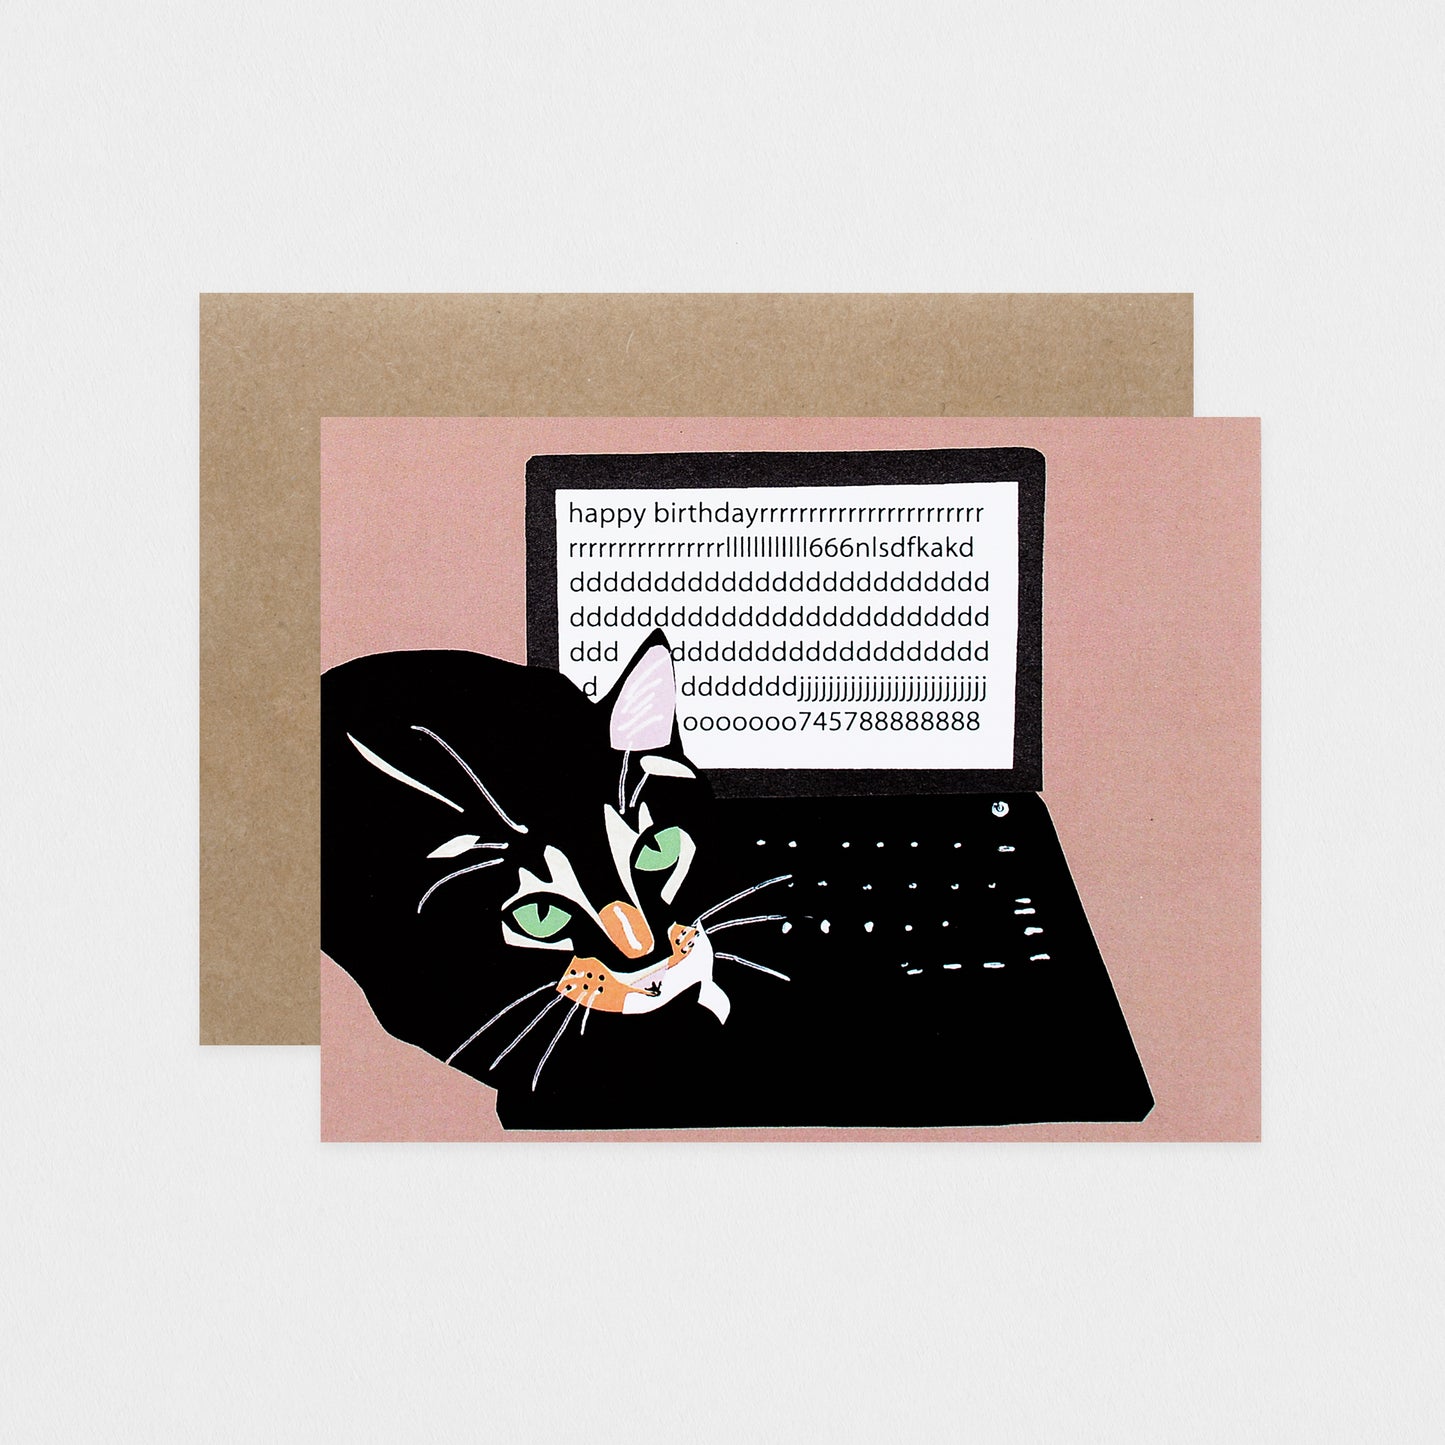 La Familia Green Cat On Keyboard Birthday Card 